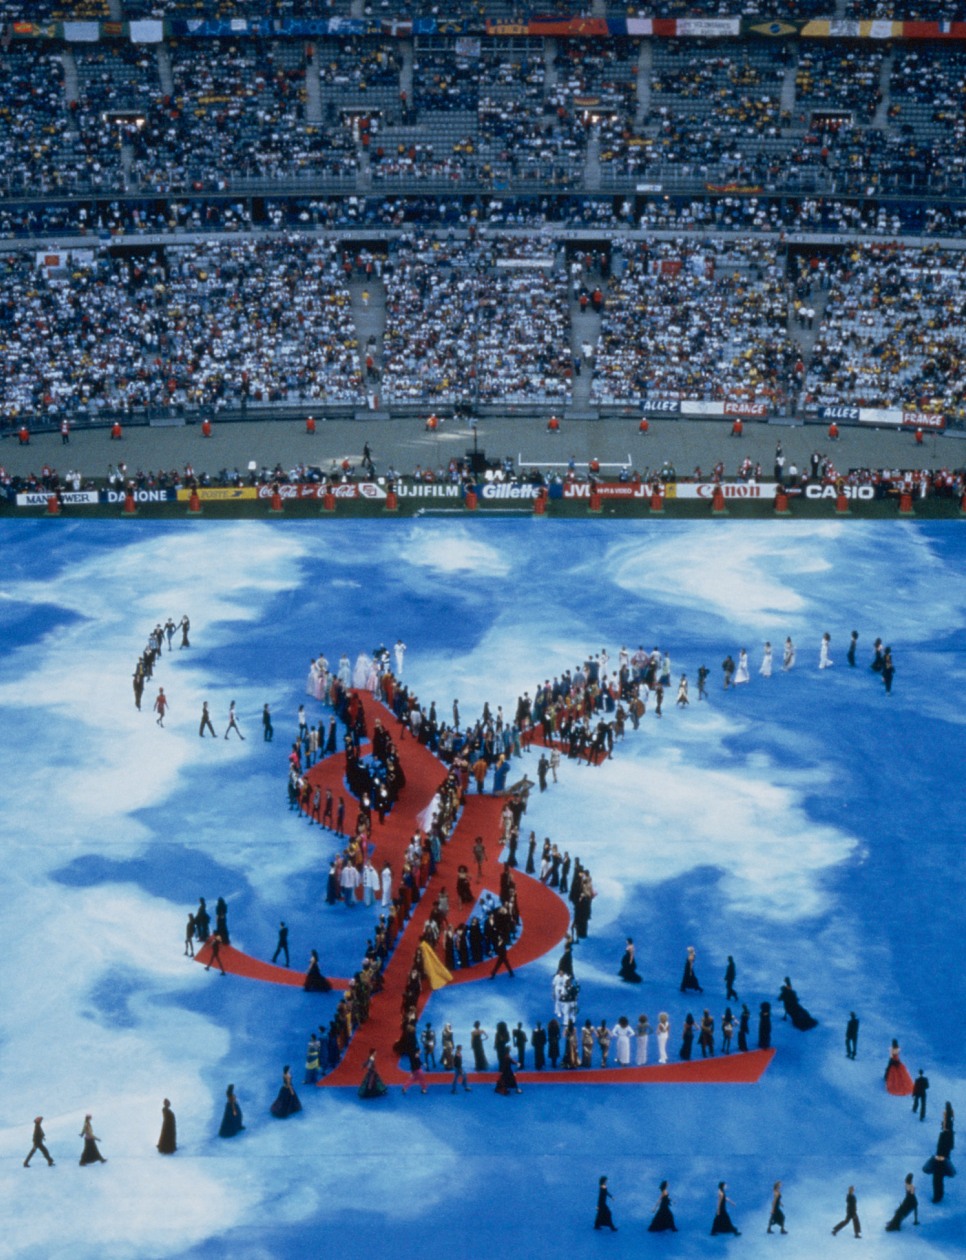 Peragaan busana Yves Saint Laurent sebelum Piala Dunia 1998